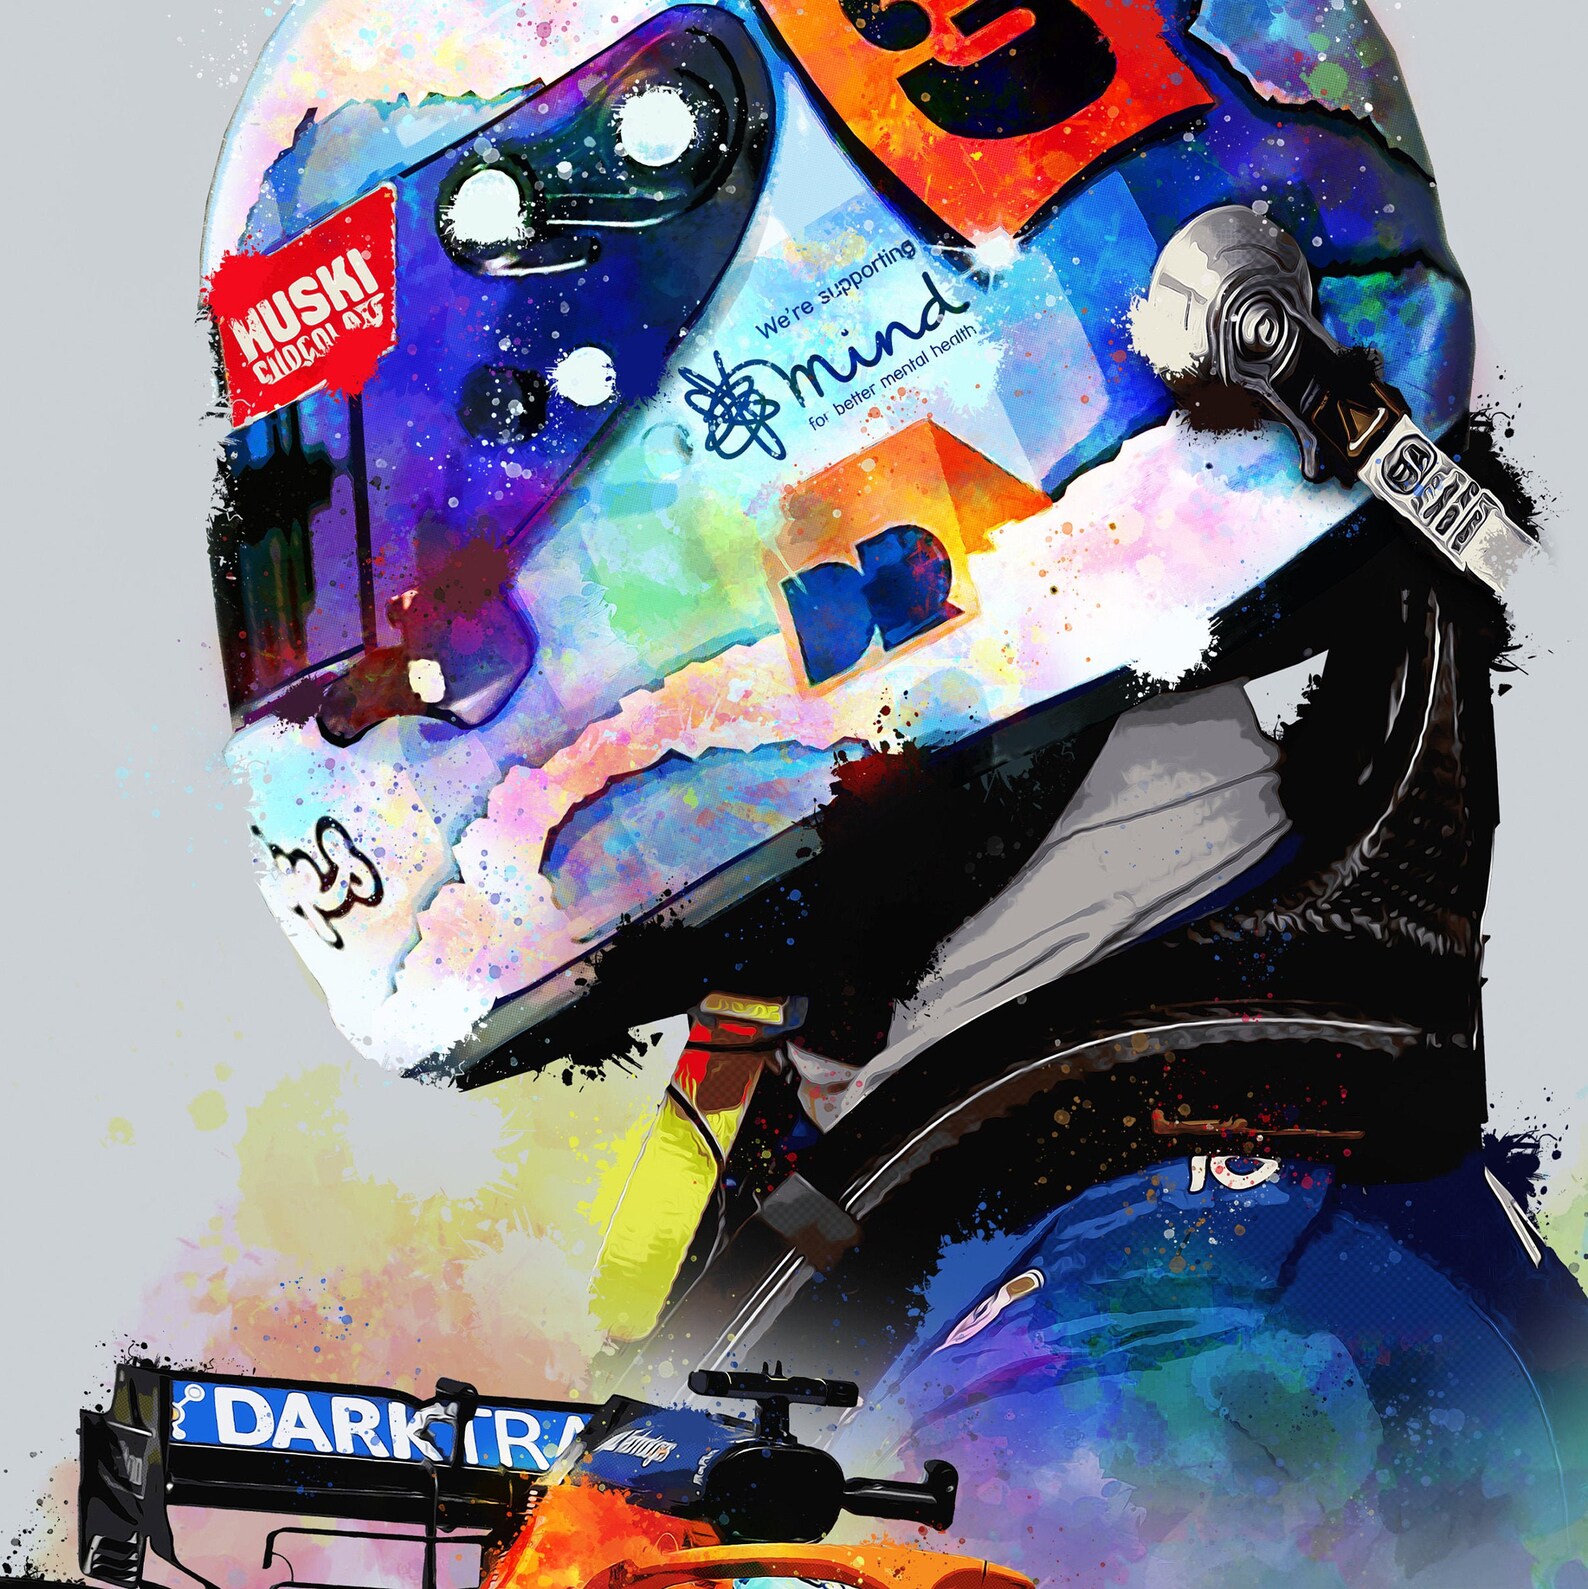 Daniel Ricciardo Mclaren F1 Car & Helmet Formula One Poster | Etsy